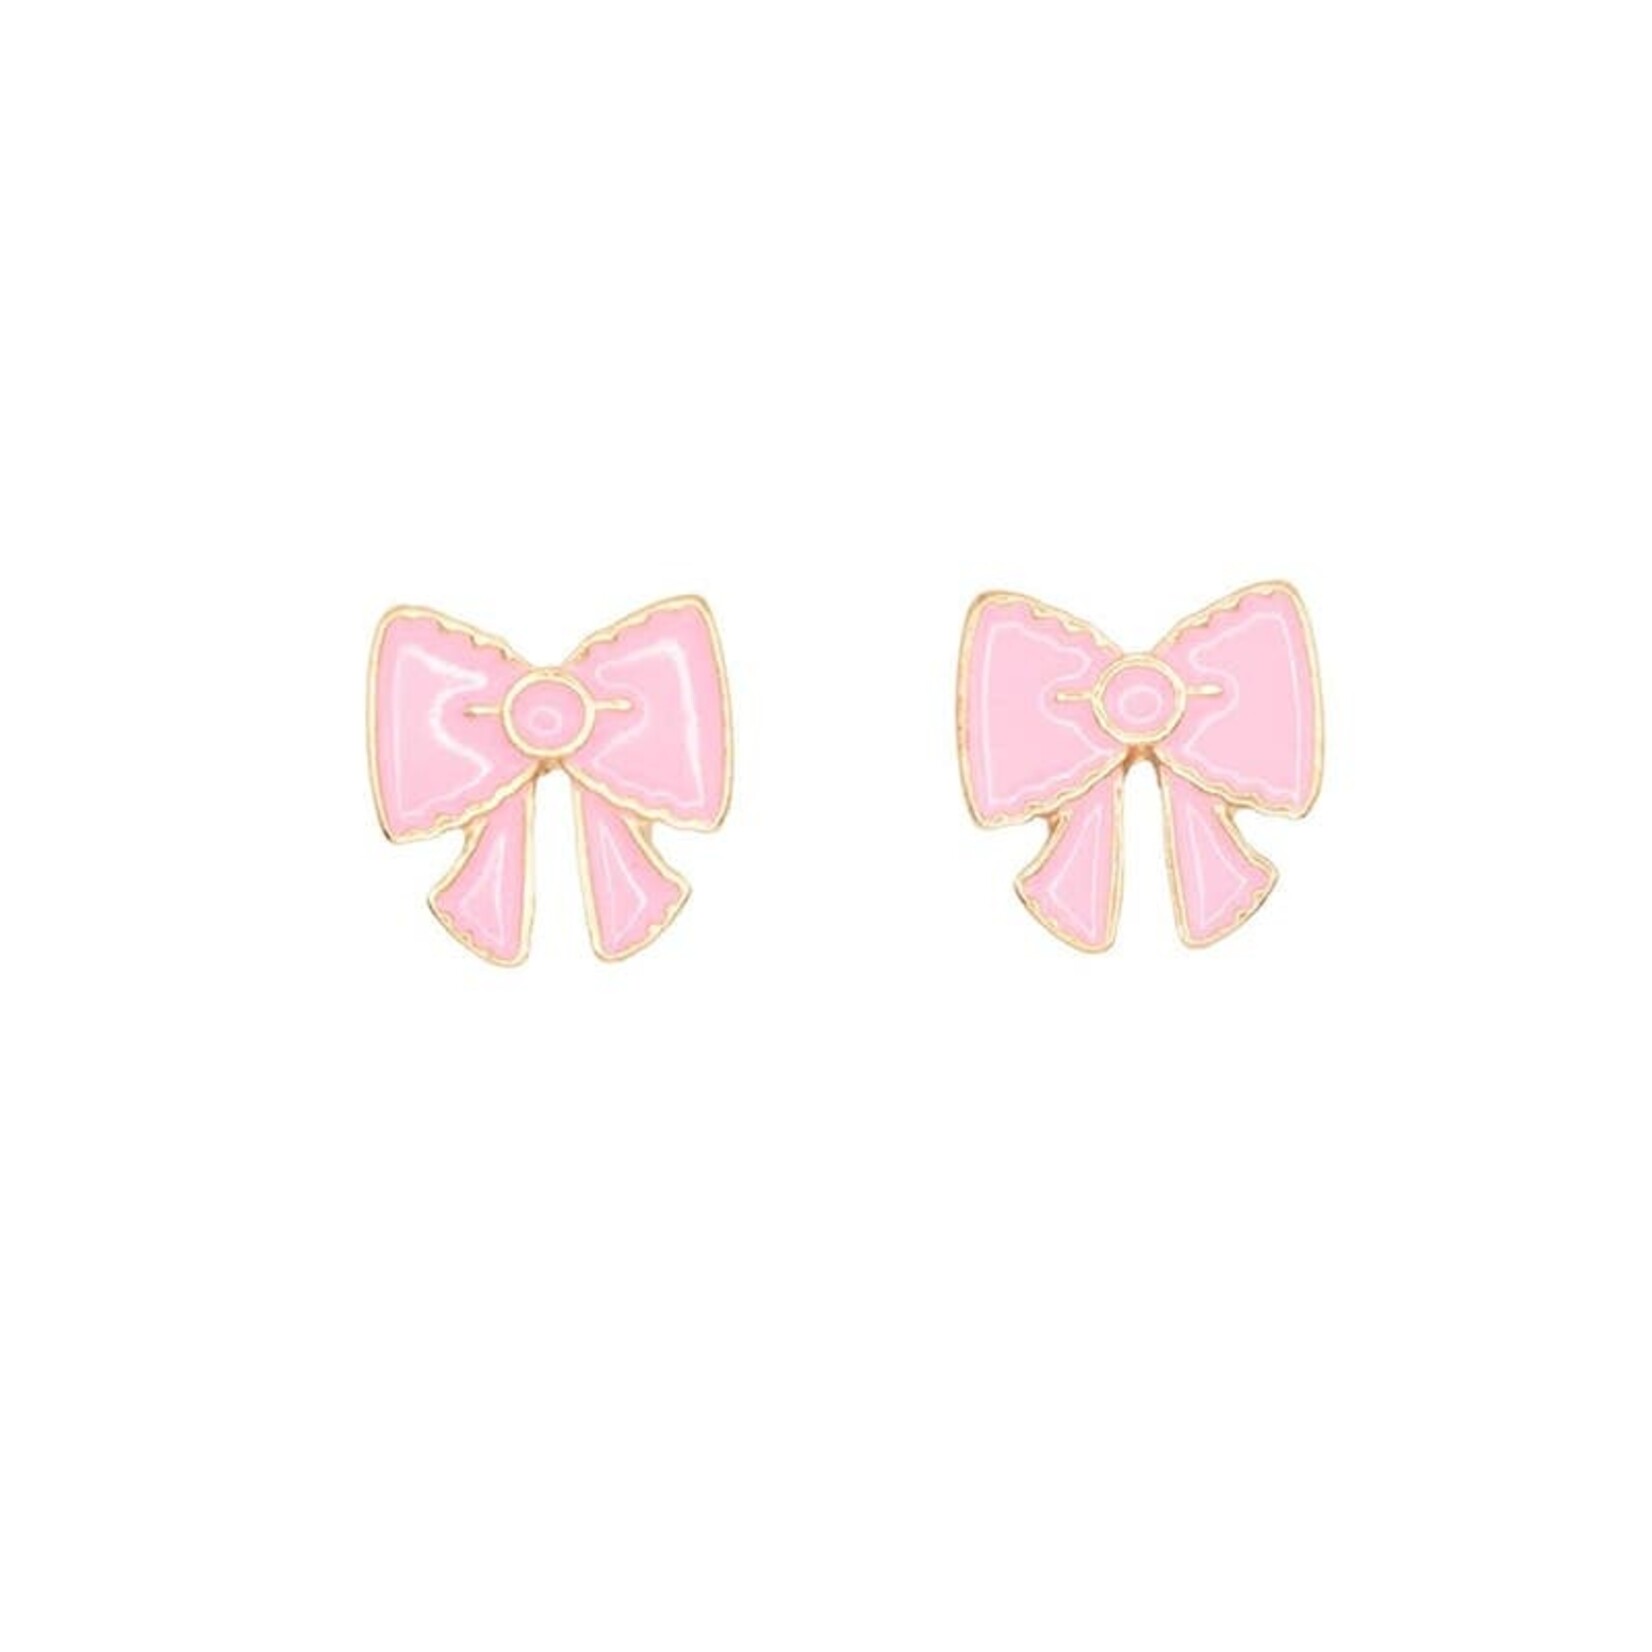 Rebecca Accessories Rebecca Accessories - Earrings - Pink Bow Post